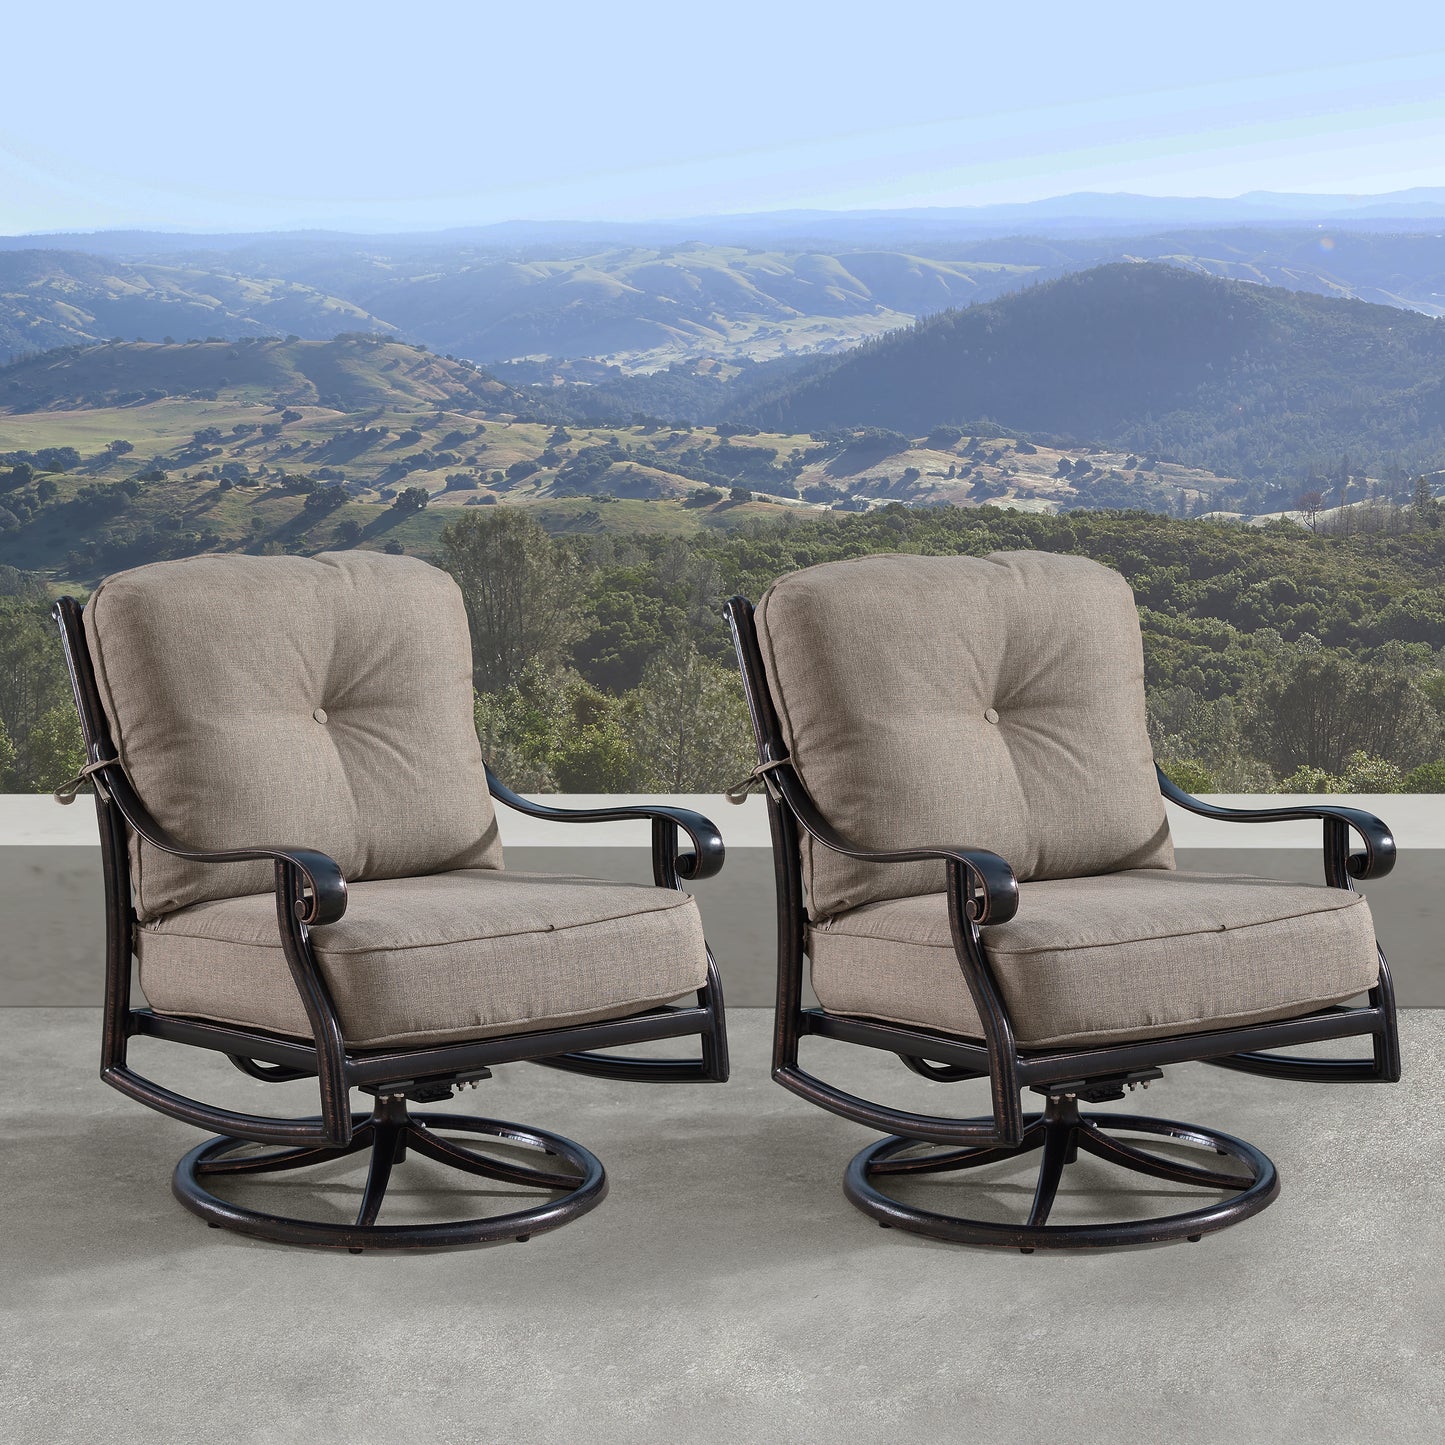 Aluminum Ornate Deep Seating Swivel Rocking Club Chairs Tan Cushions